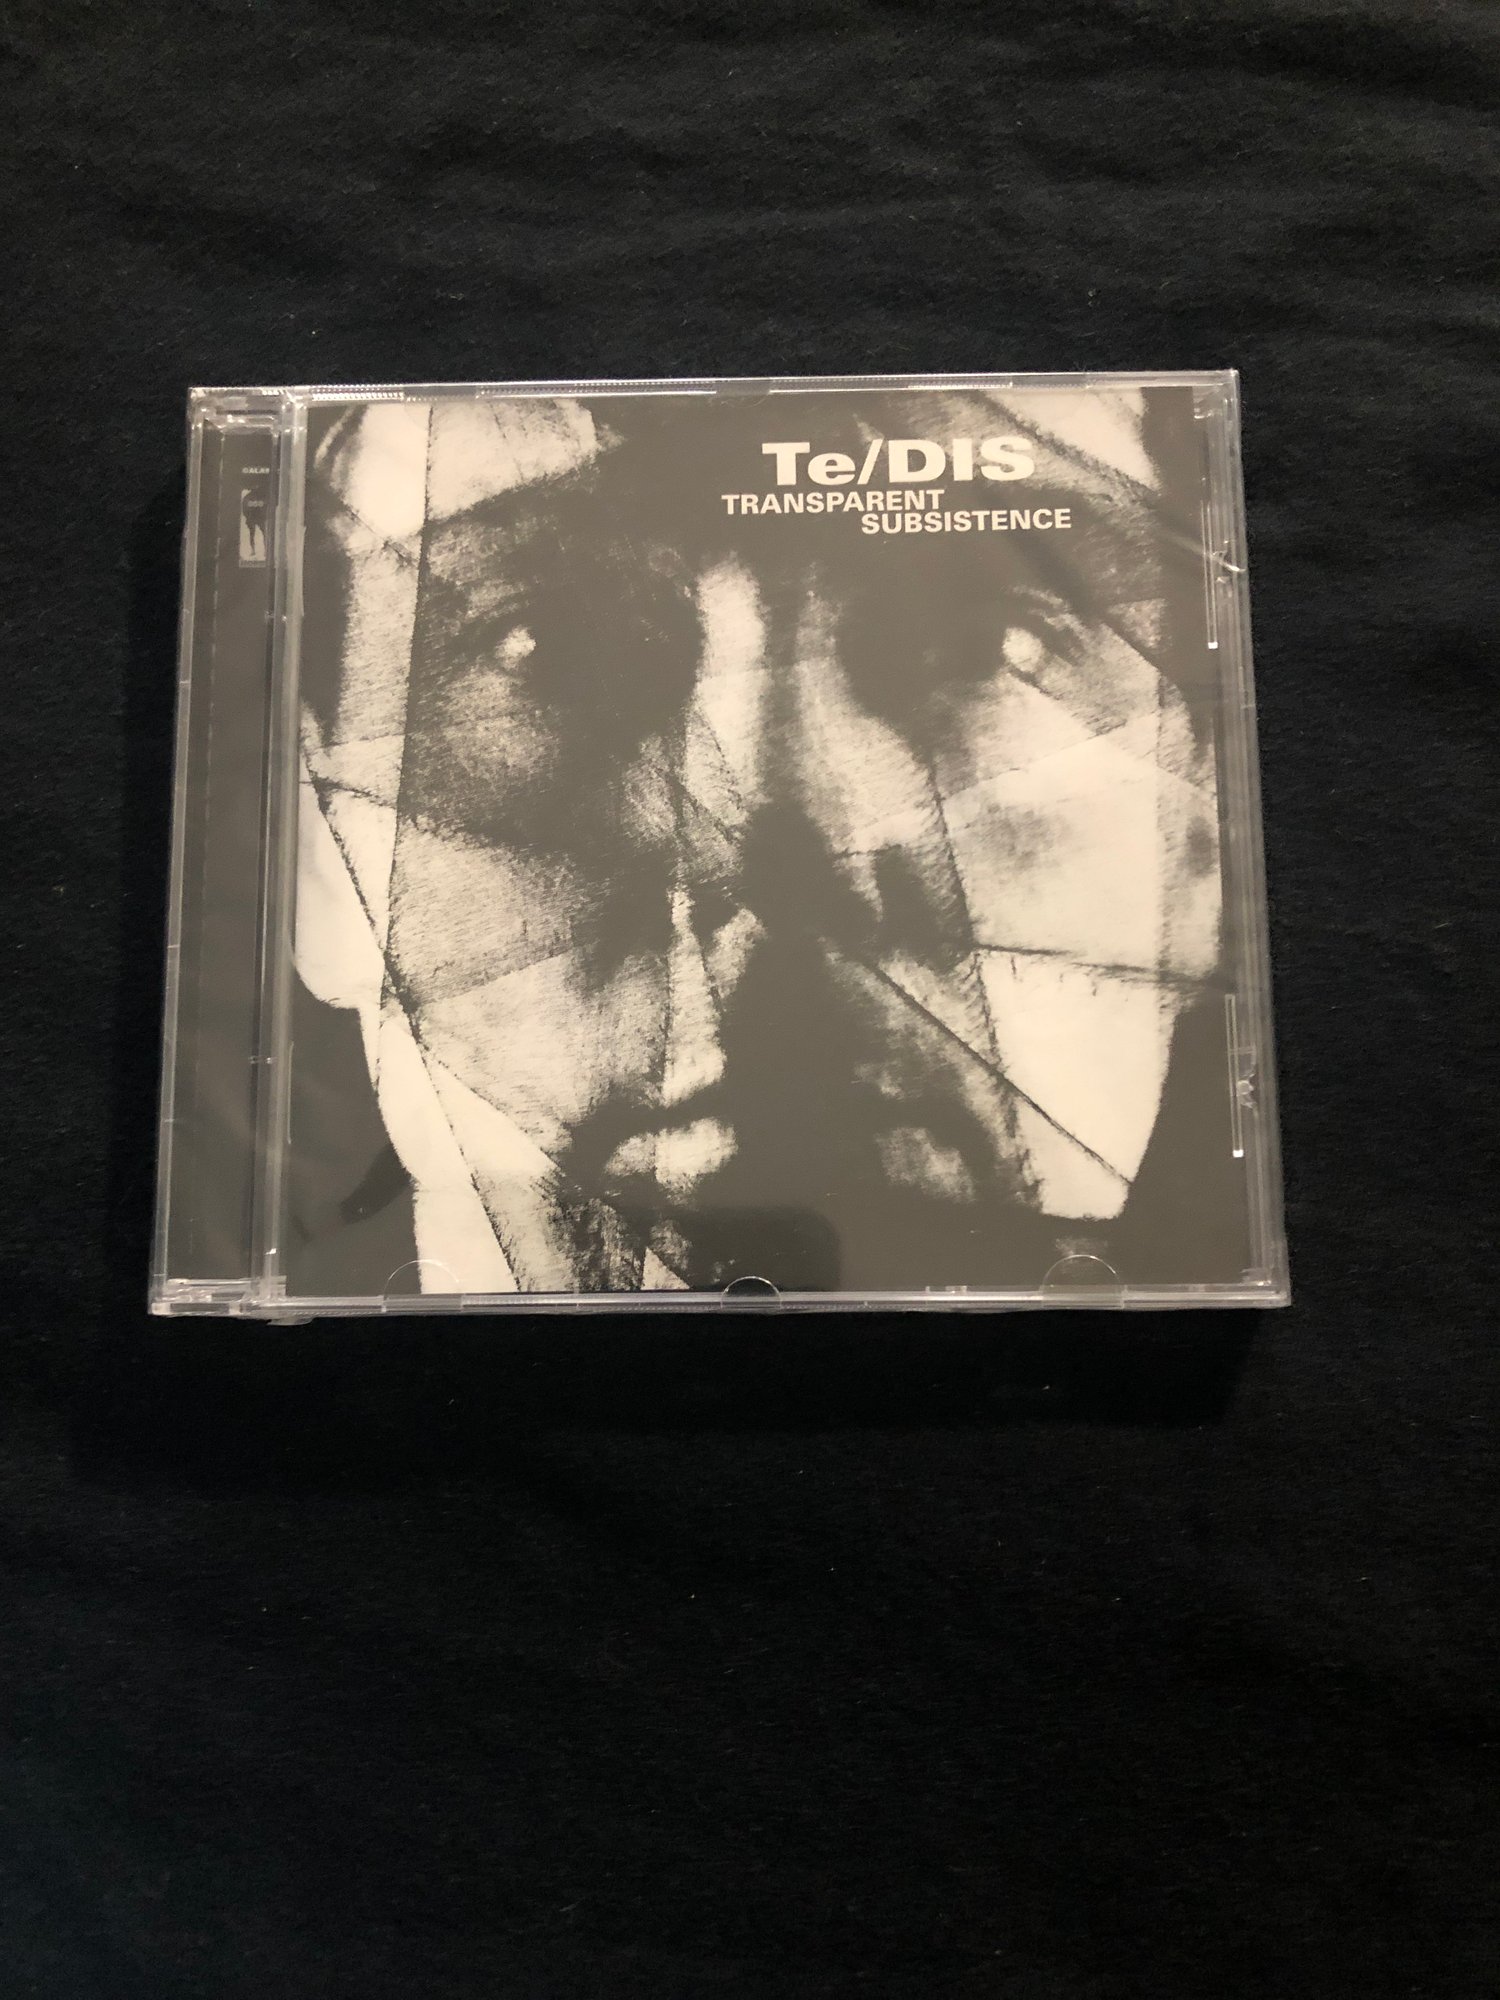 TE/DIS - TRANSPARENT SUBSISTENCE CD (Galakthorro)